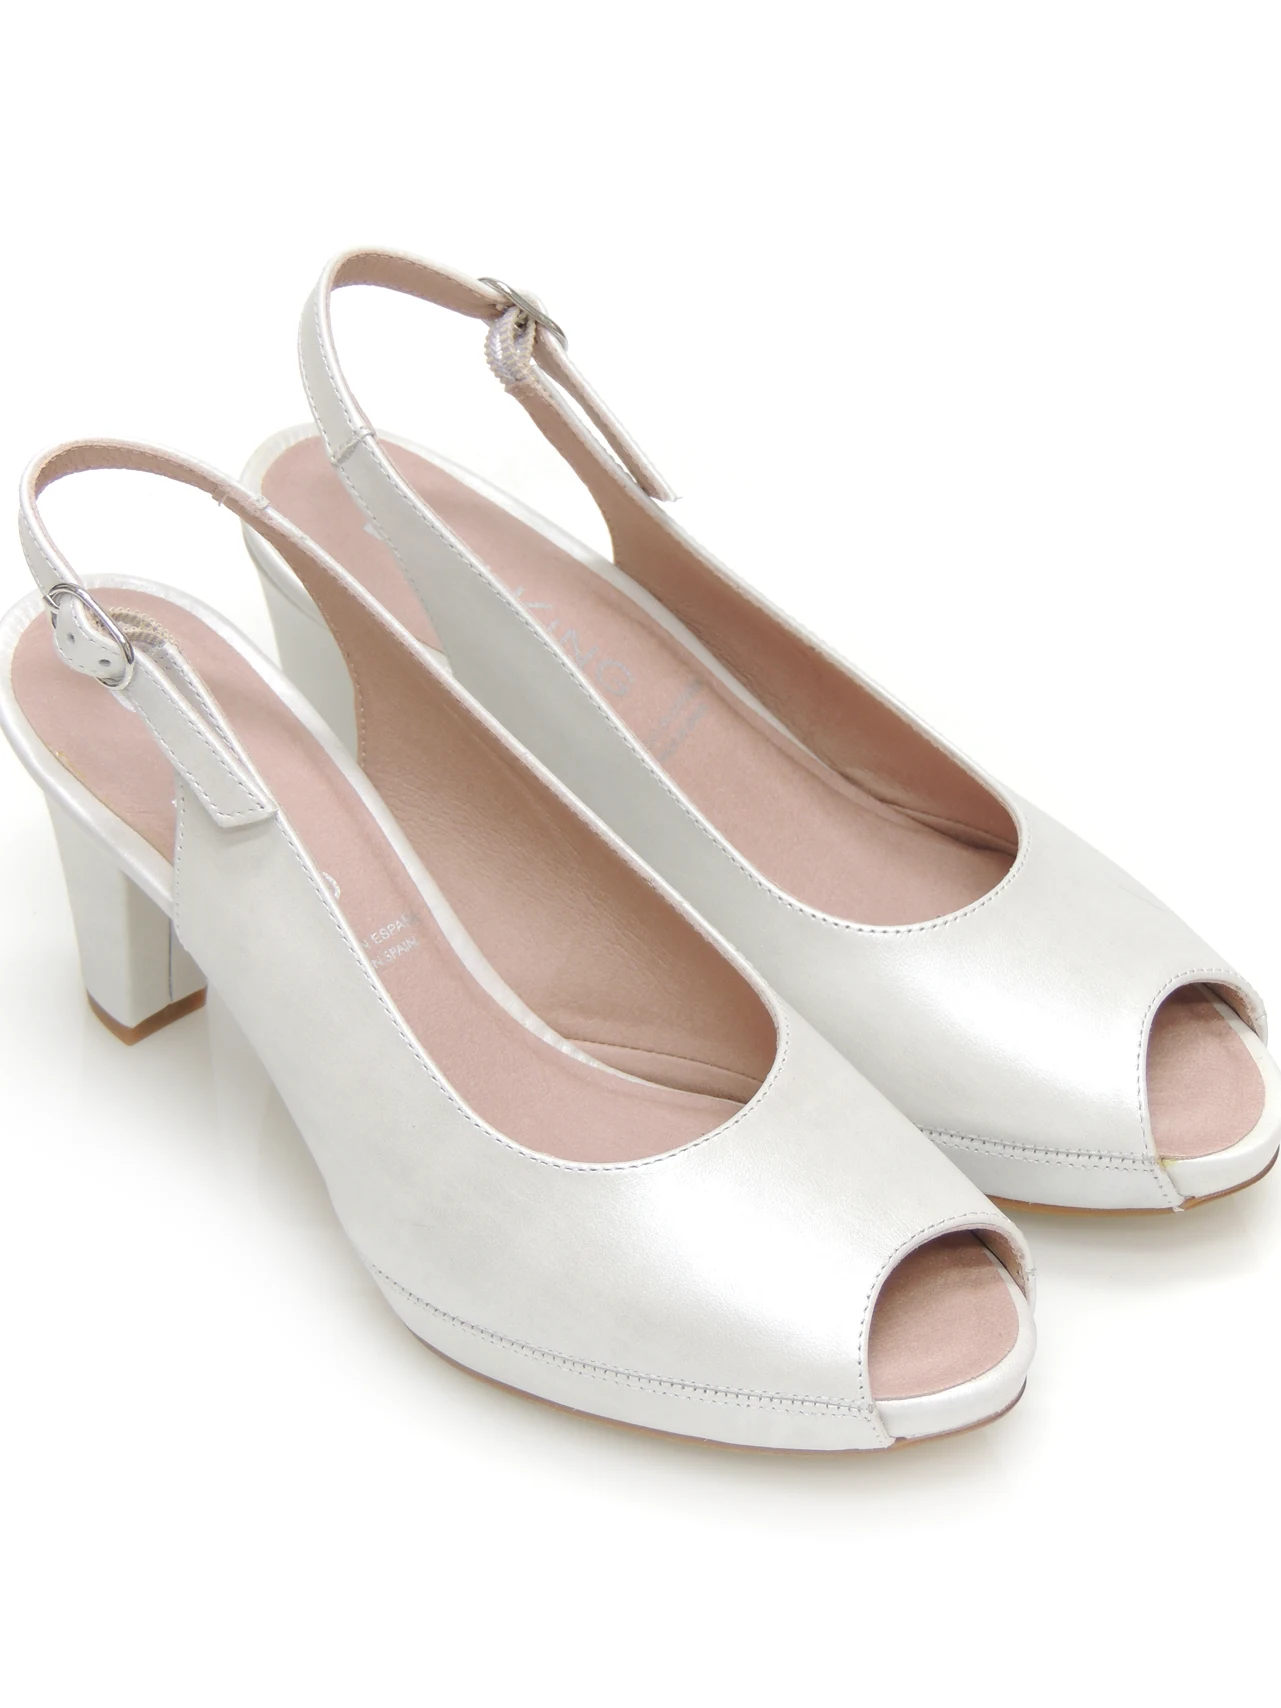 zapatos-peep toe-dorking-d6604-piel-blanco